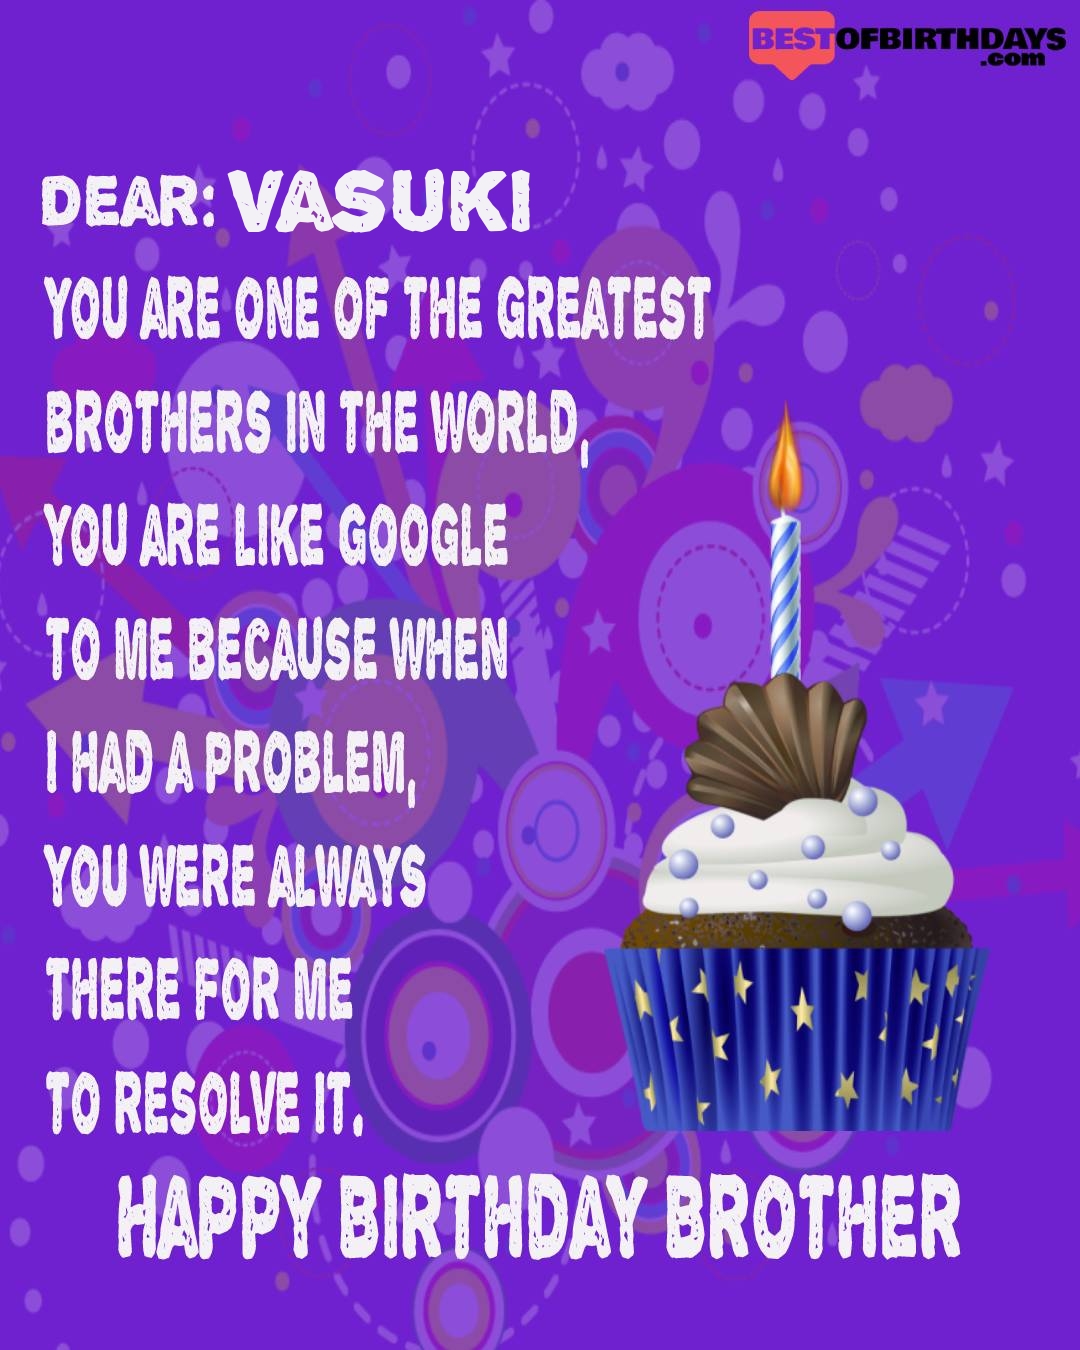 Happy birthday vasuki bhai brother bro